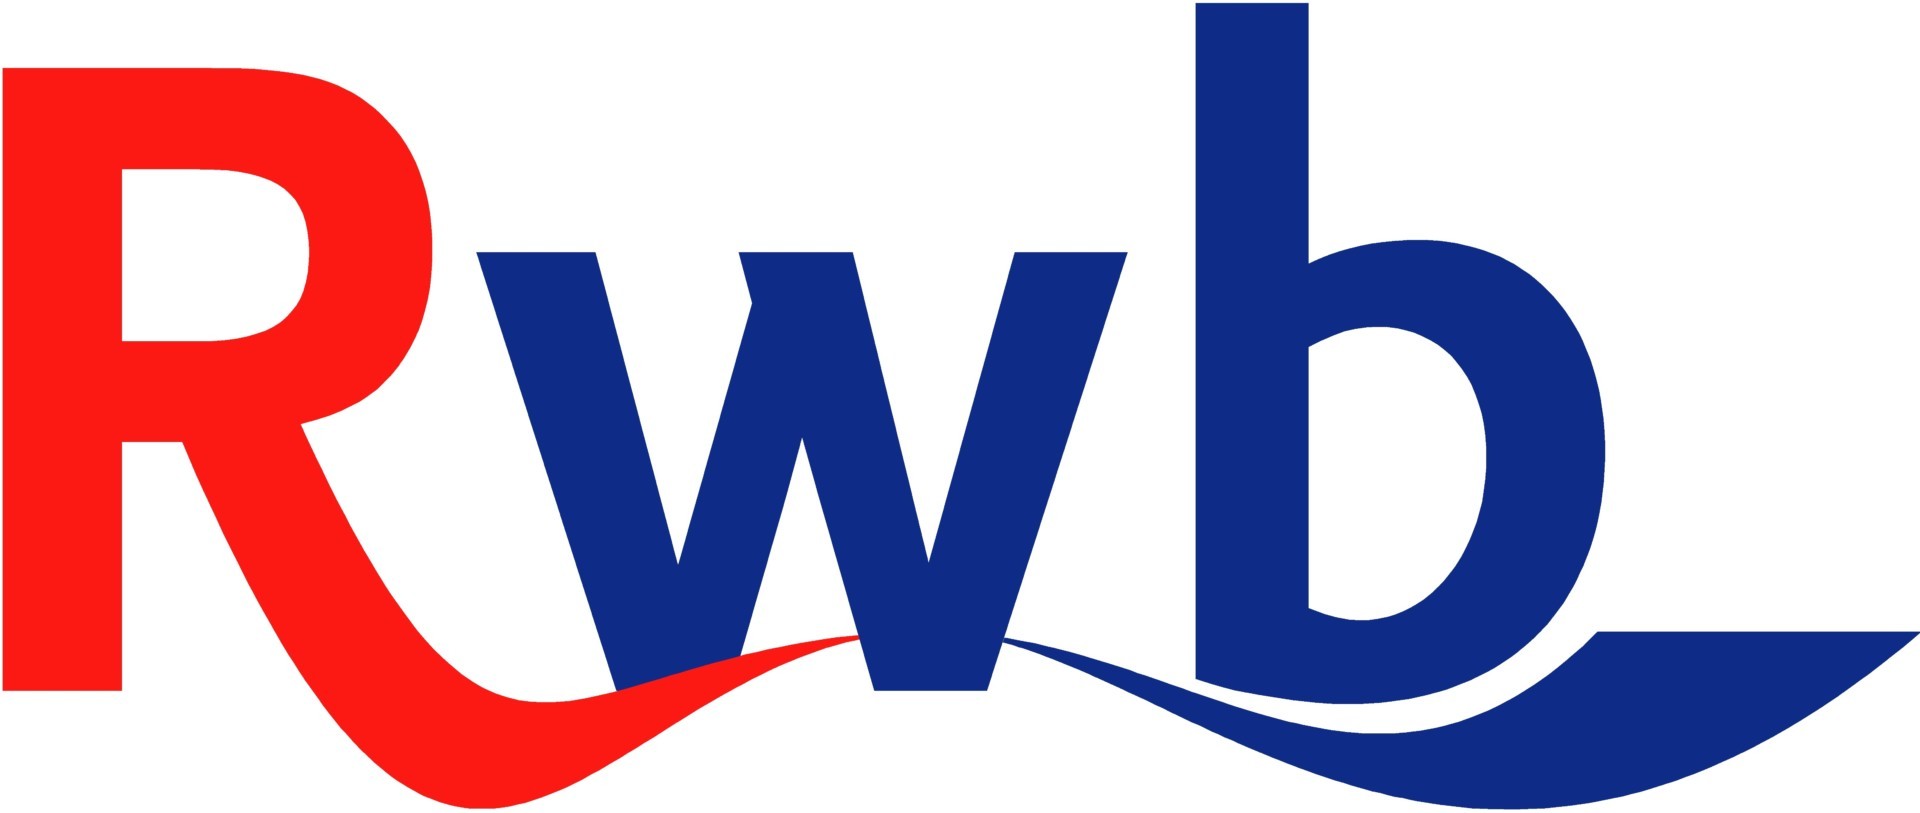 RWB-logo-jpg-high-res